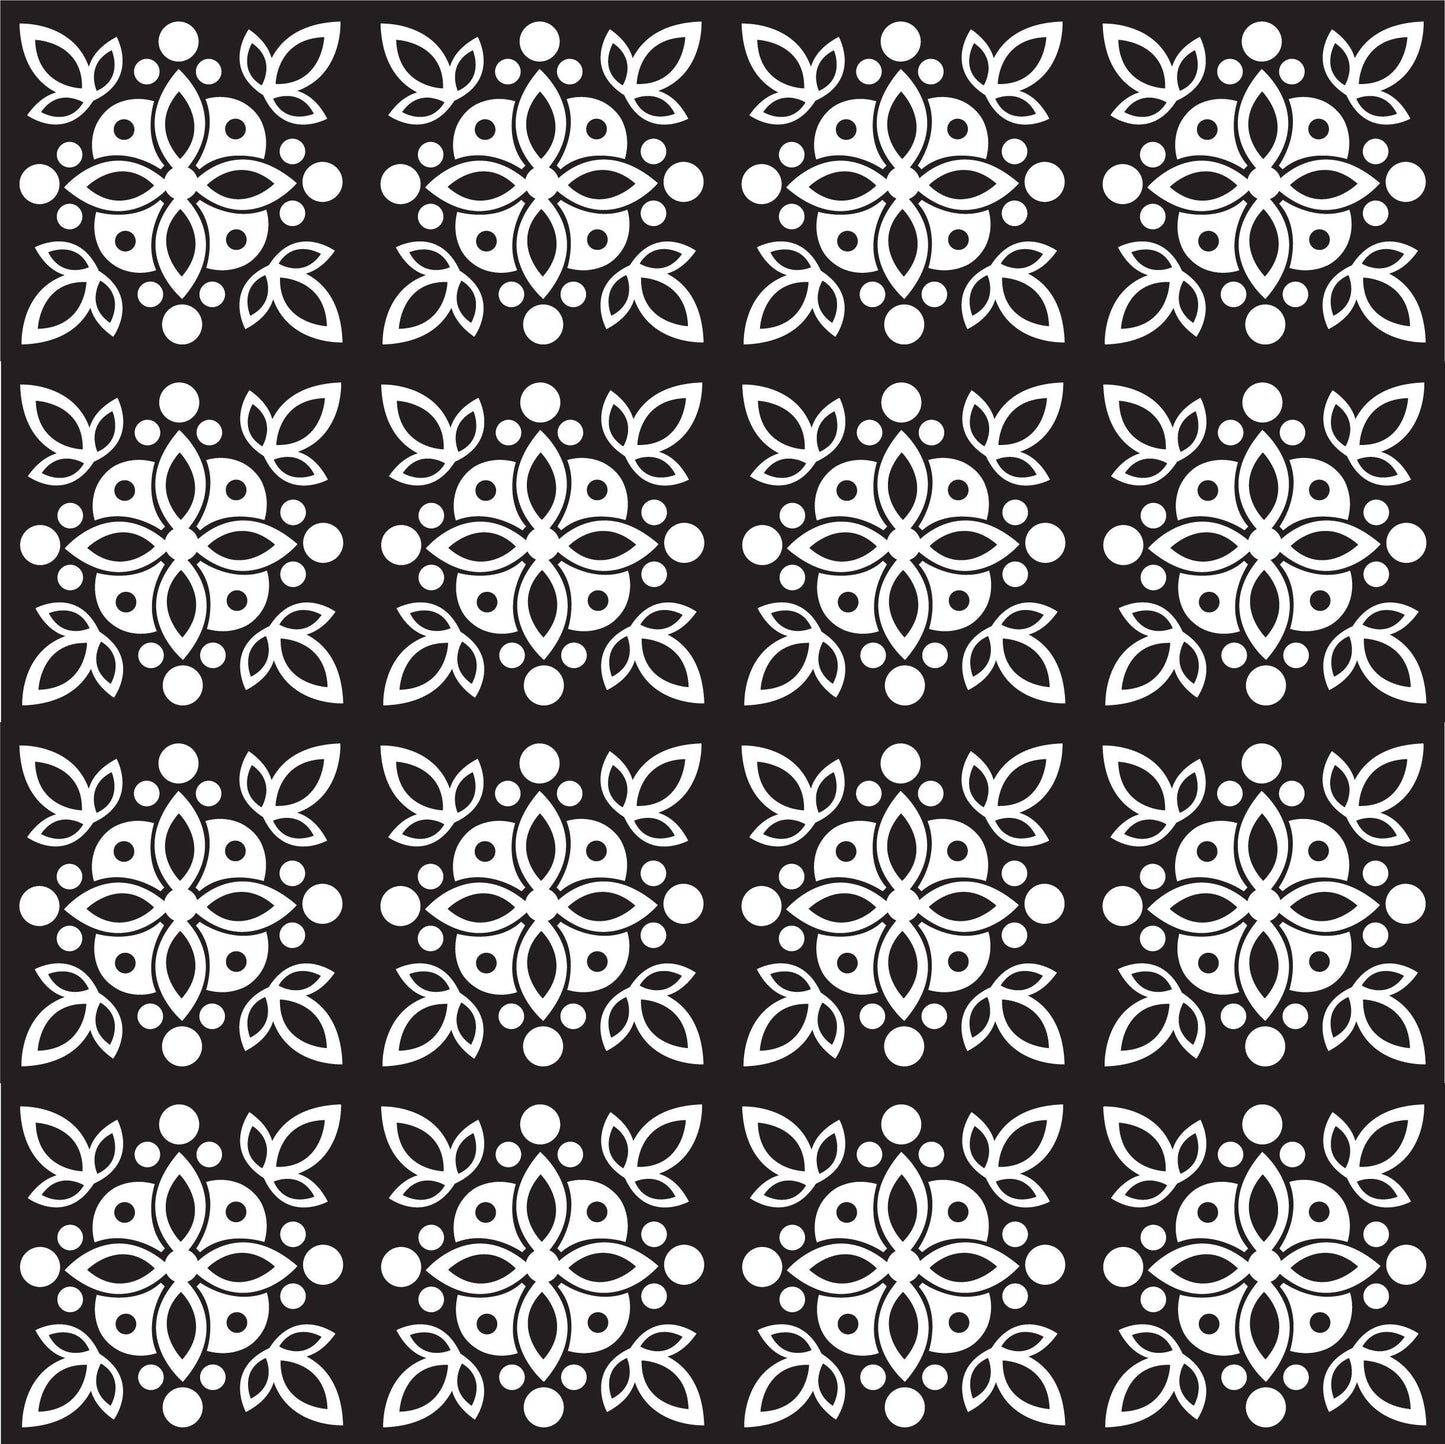 Black & White Vintage Floral Tile Stickers